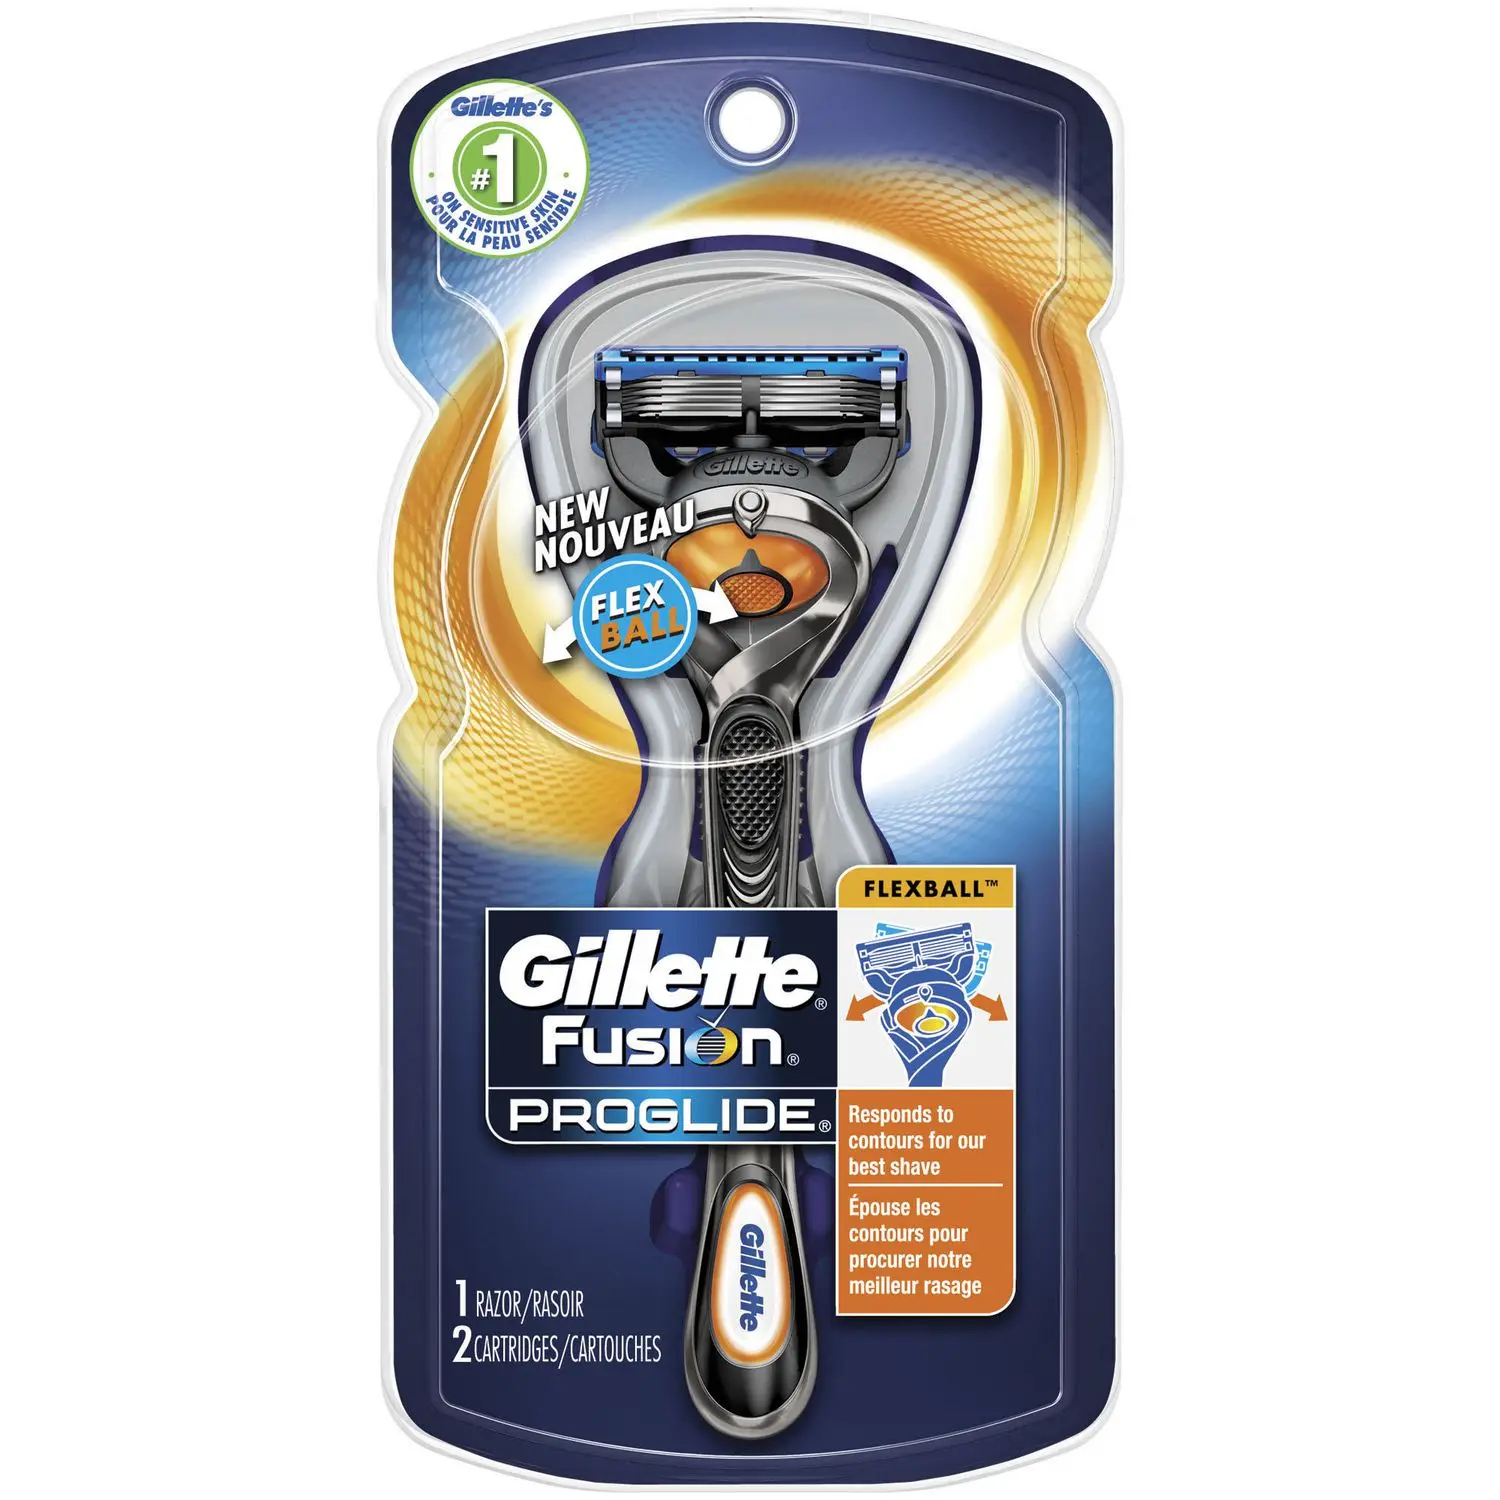 verzekering Ban Typisch Top Wholesale Gillette Proglide Mens Razor Blades Refill Cartridges - Buy Gillette  Fusion Power Blades,Cutting Blade,Gillette Shaving Blade Product on  Alibaba.com